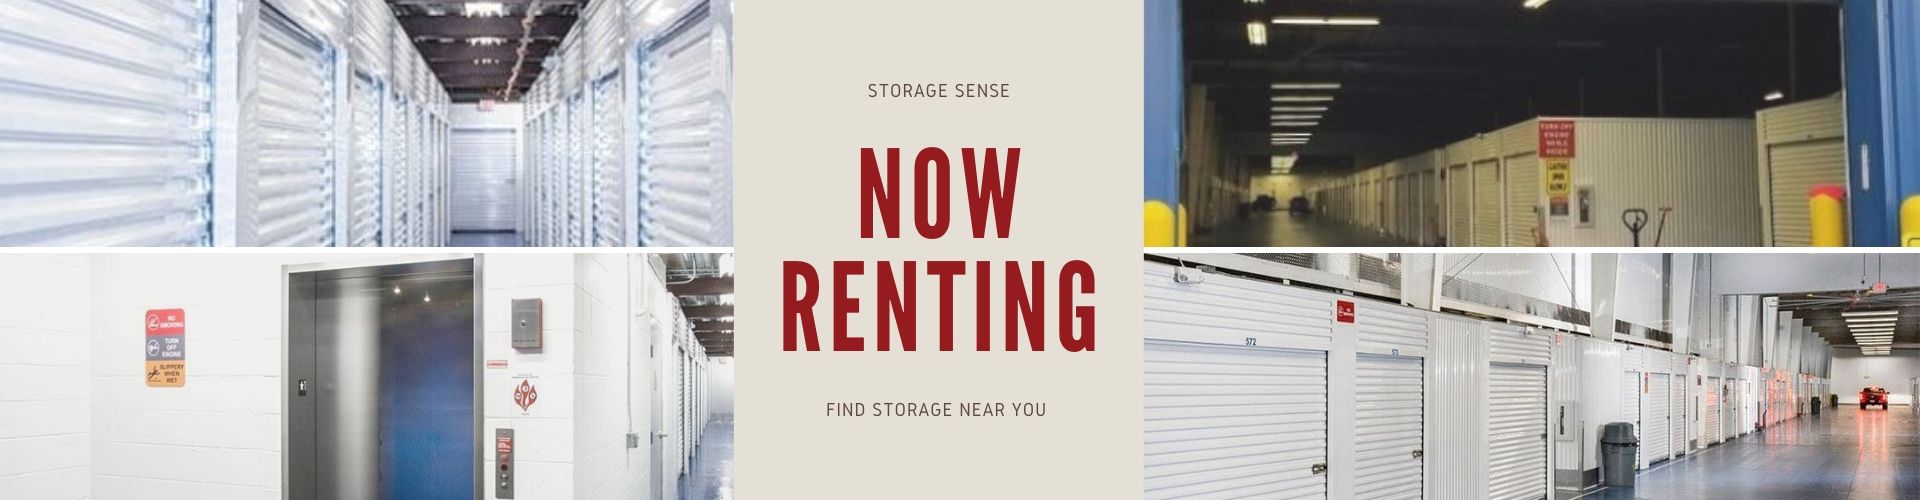 Now Renting Storage Sense Appleton WI